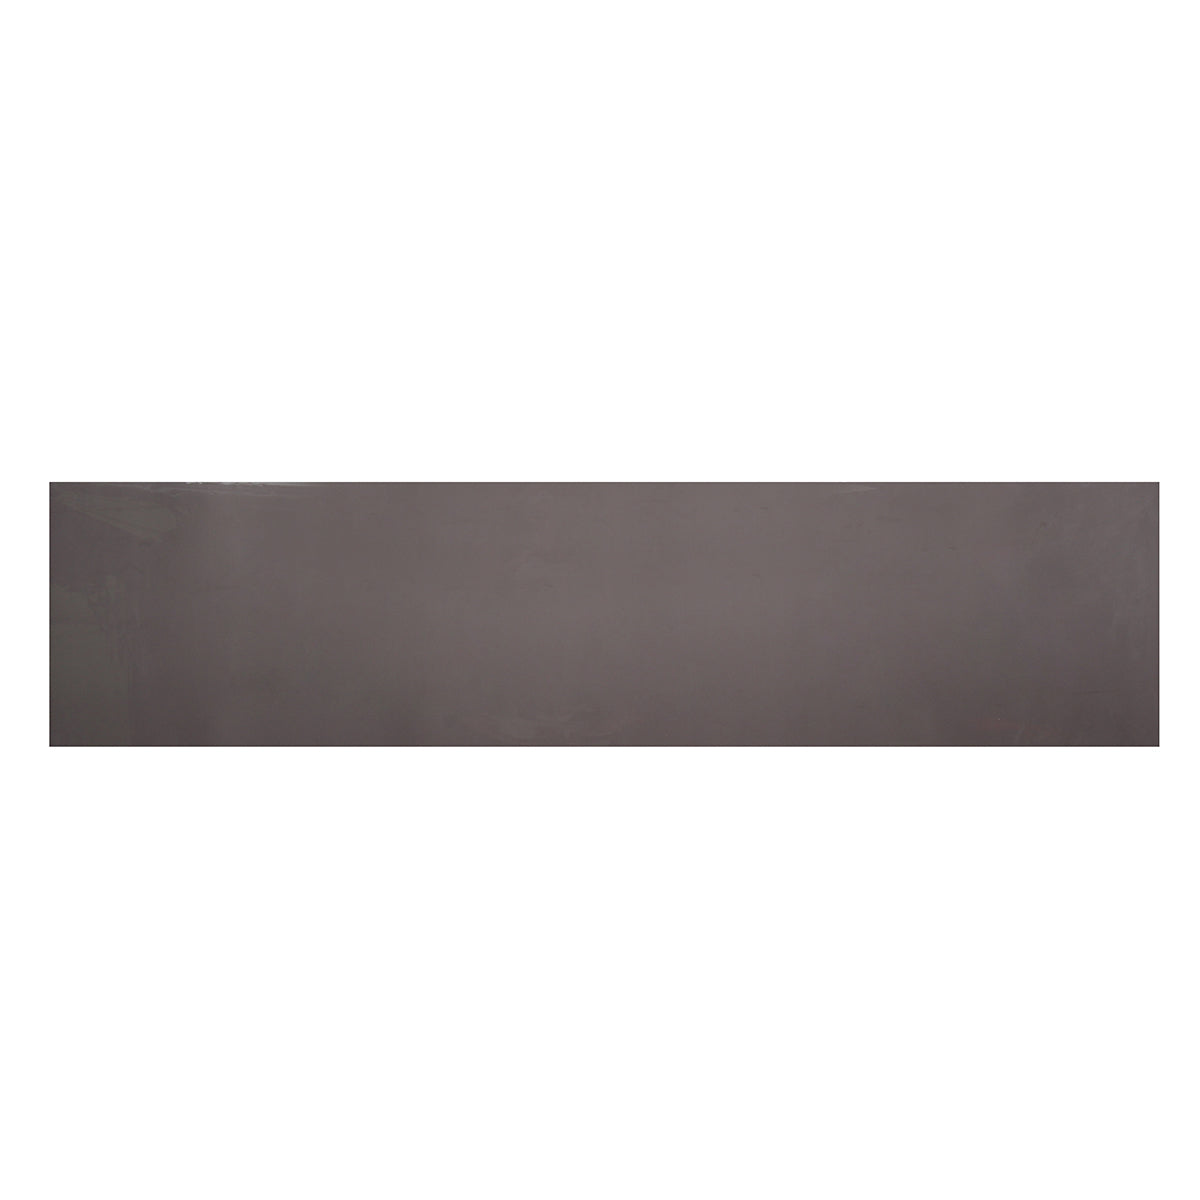 Dim Gray 50cmx2m 15% VLT Black Car Glass Window Tint Shade Film Roll for Home Office Boat